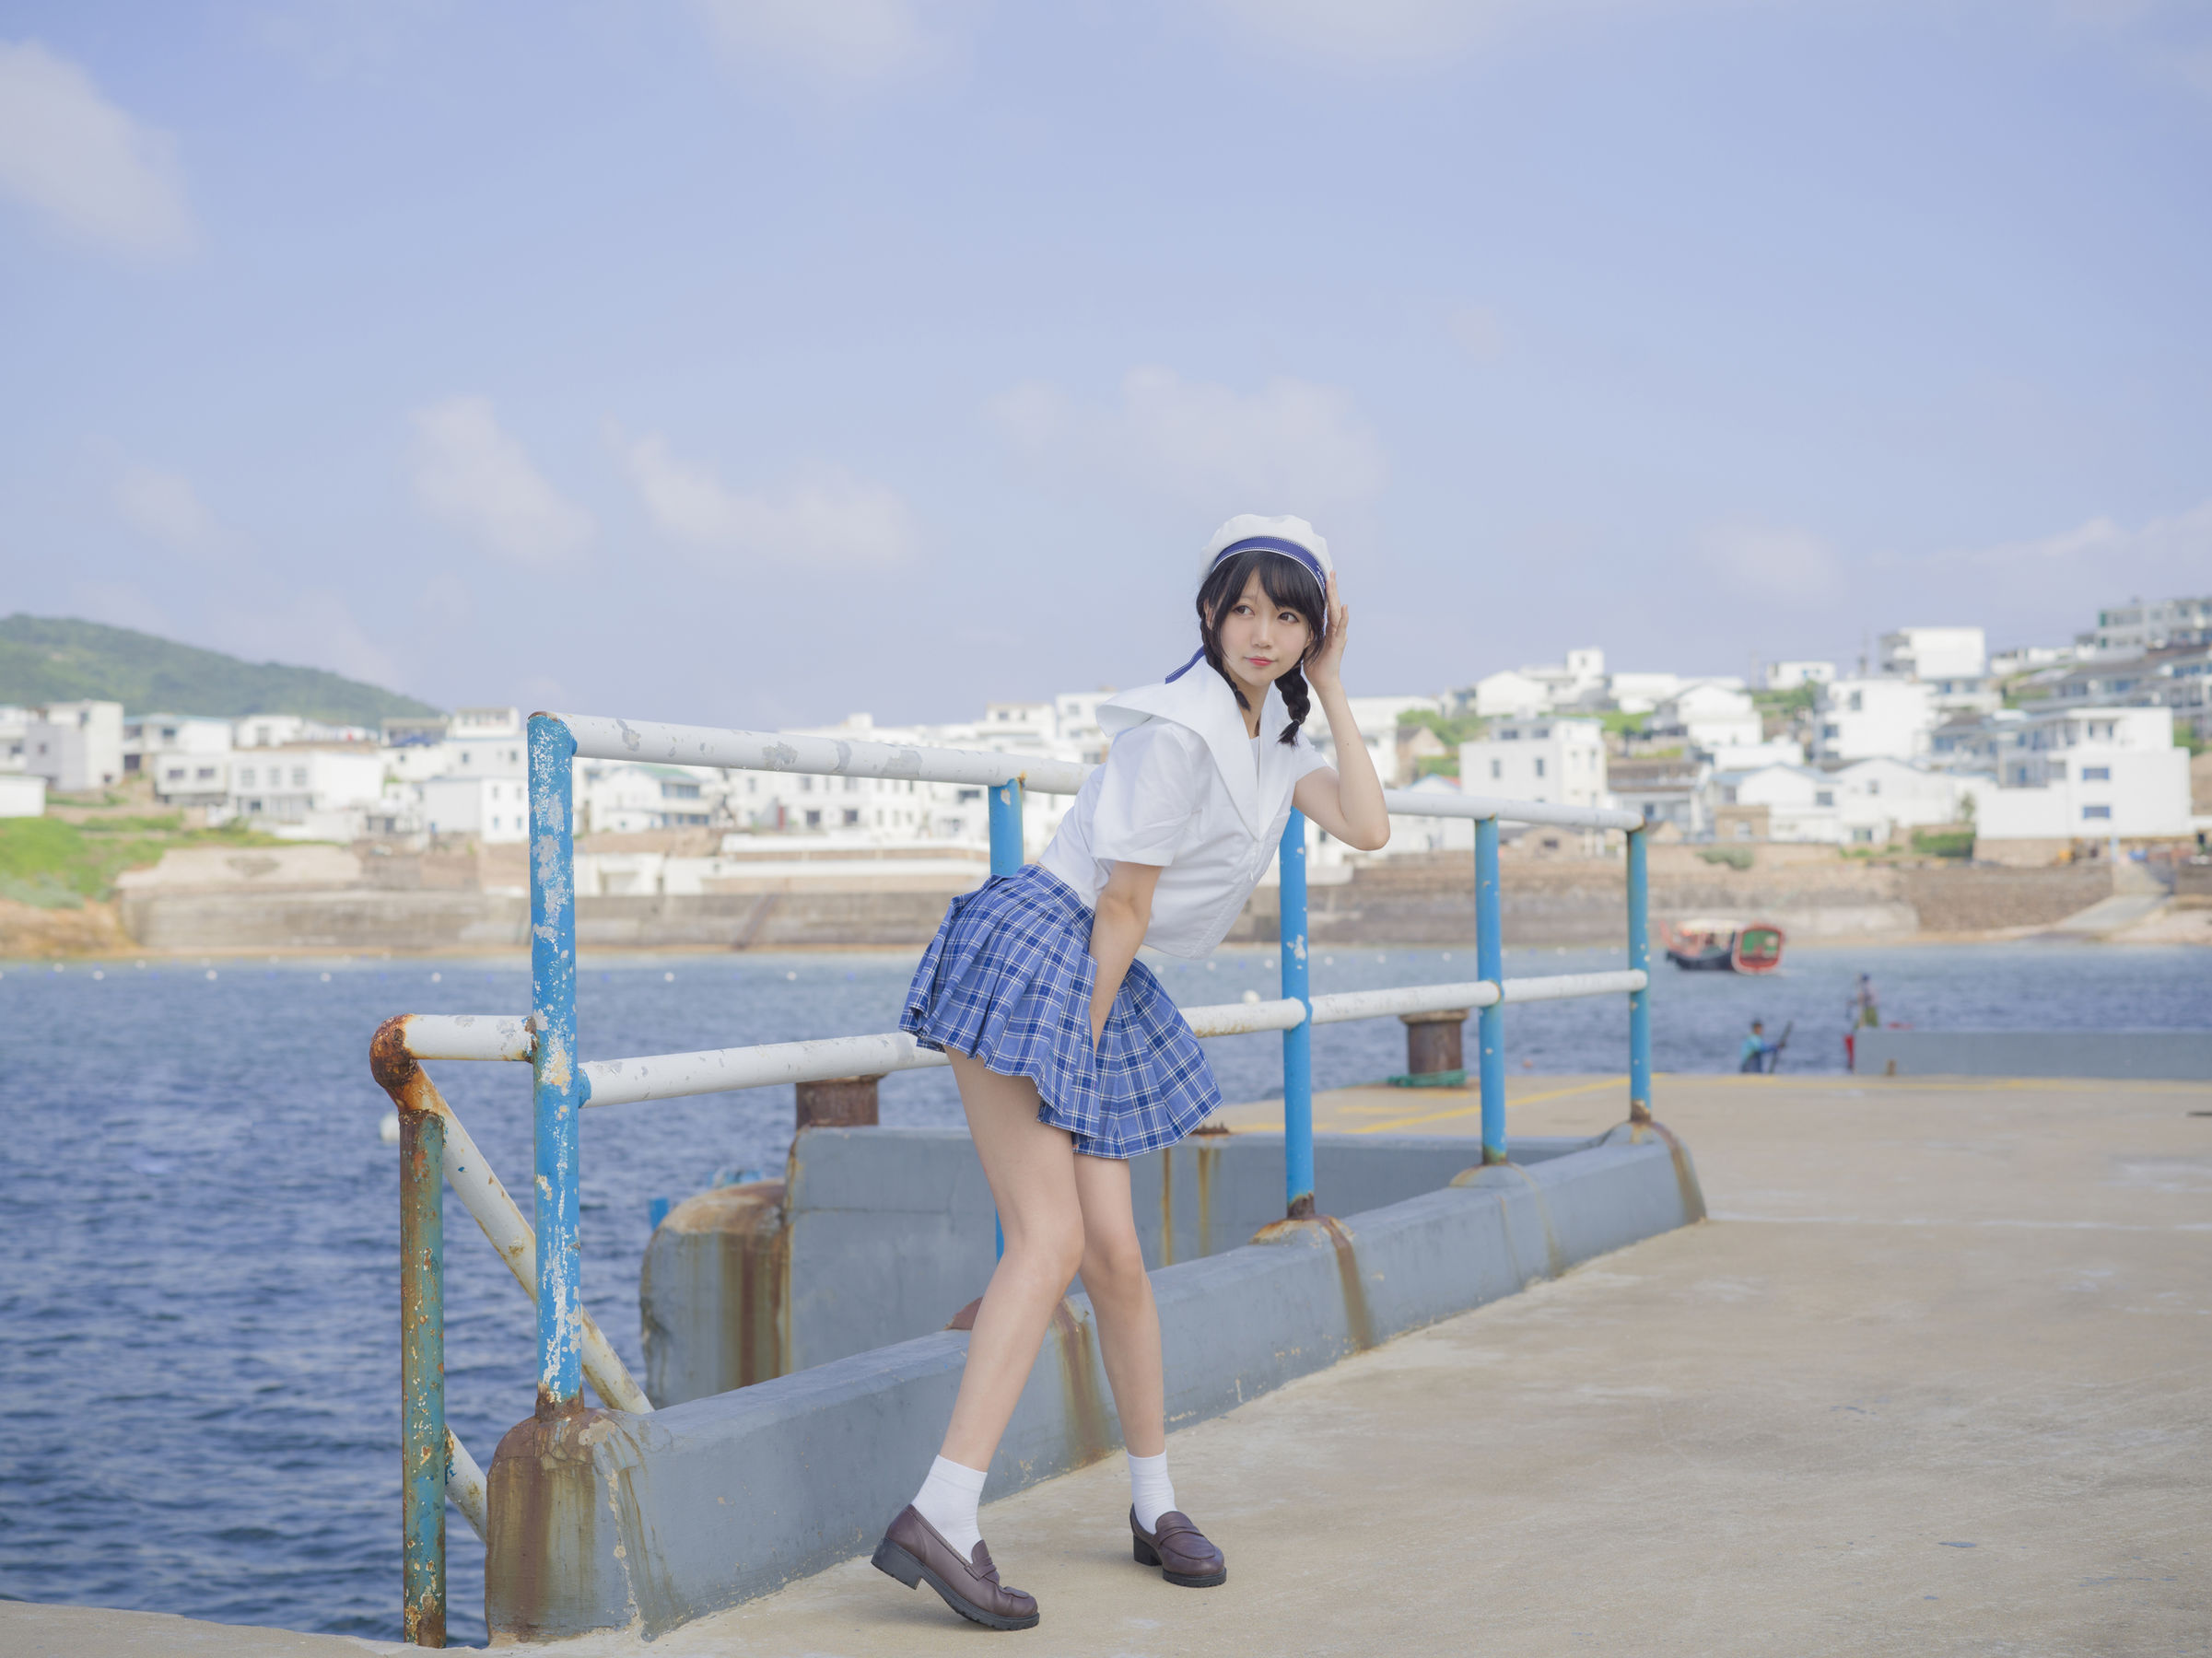 [Cosplay写真] NAGISA魔物喵 - 海风与少女